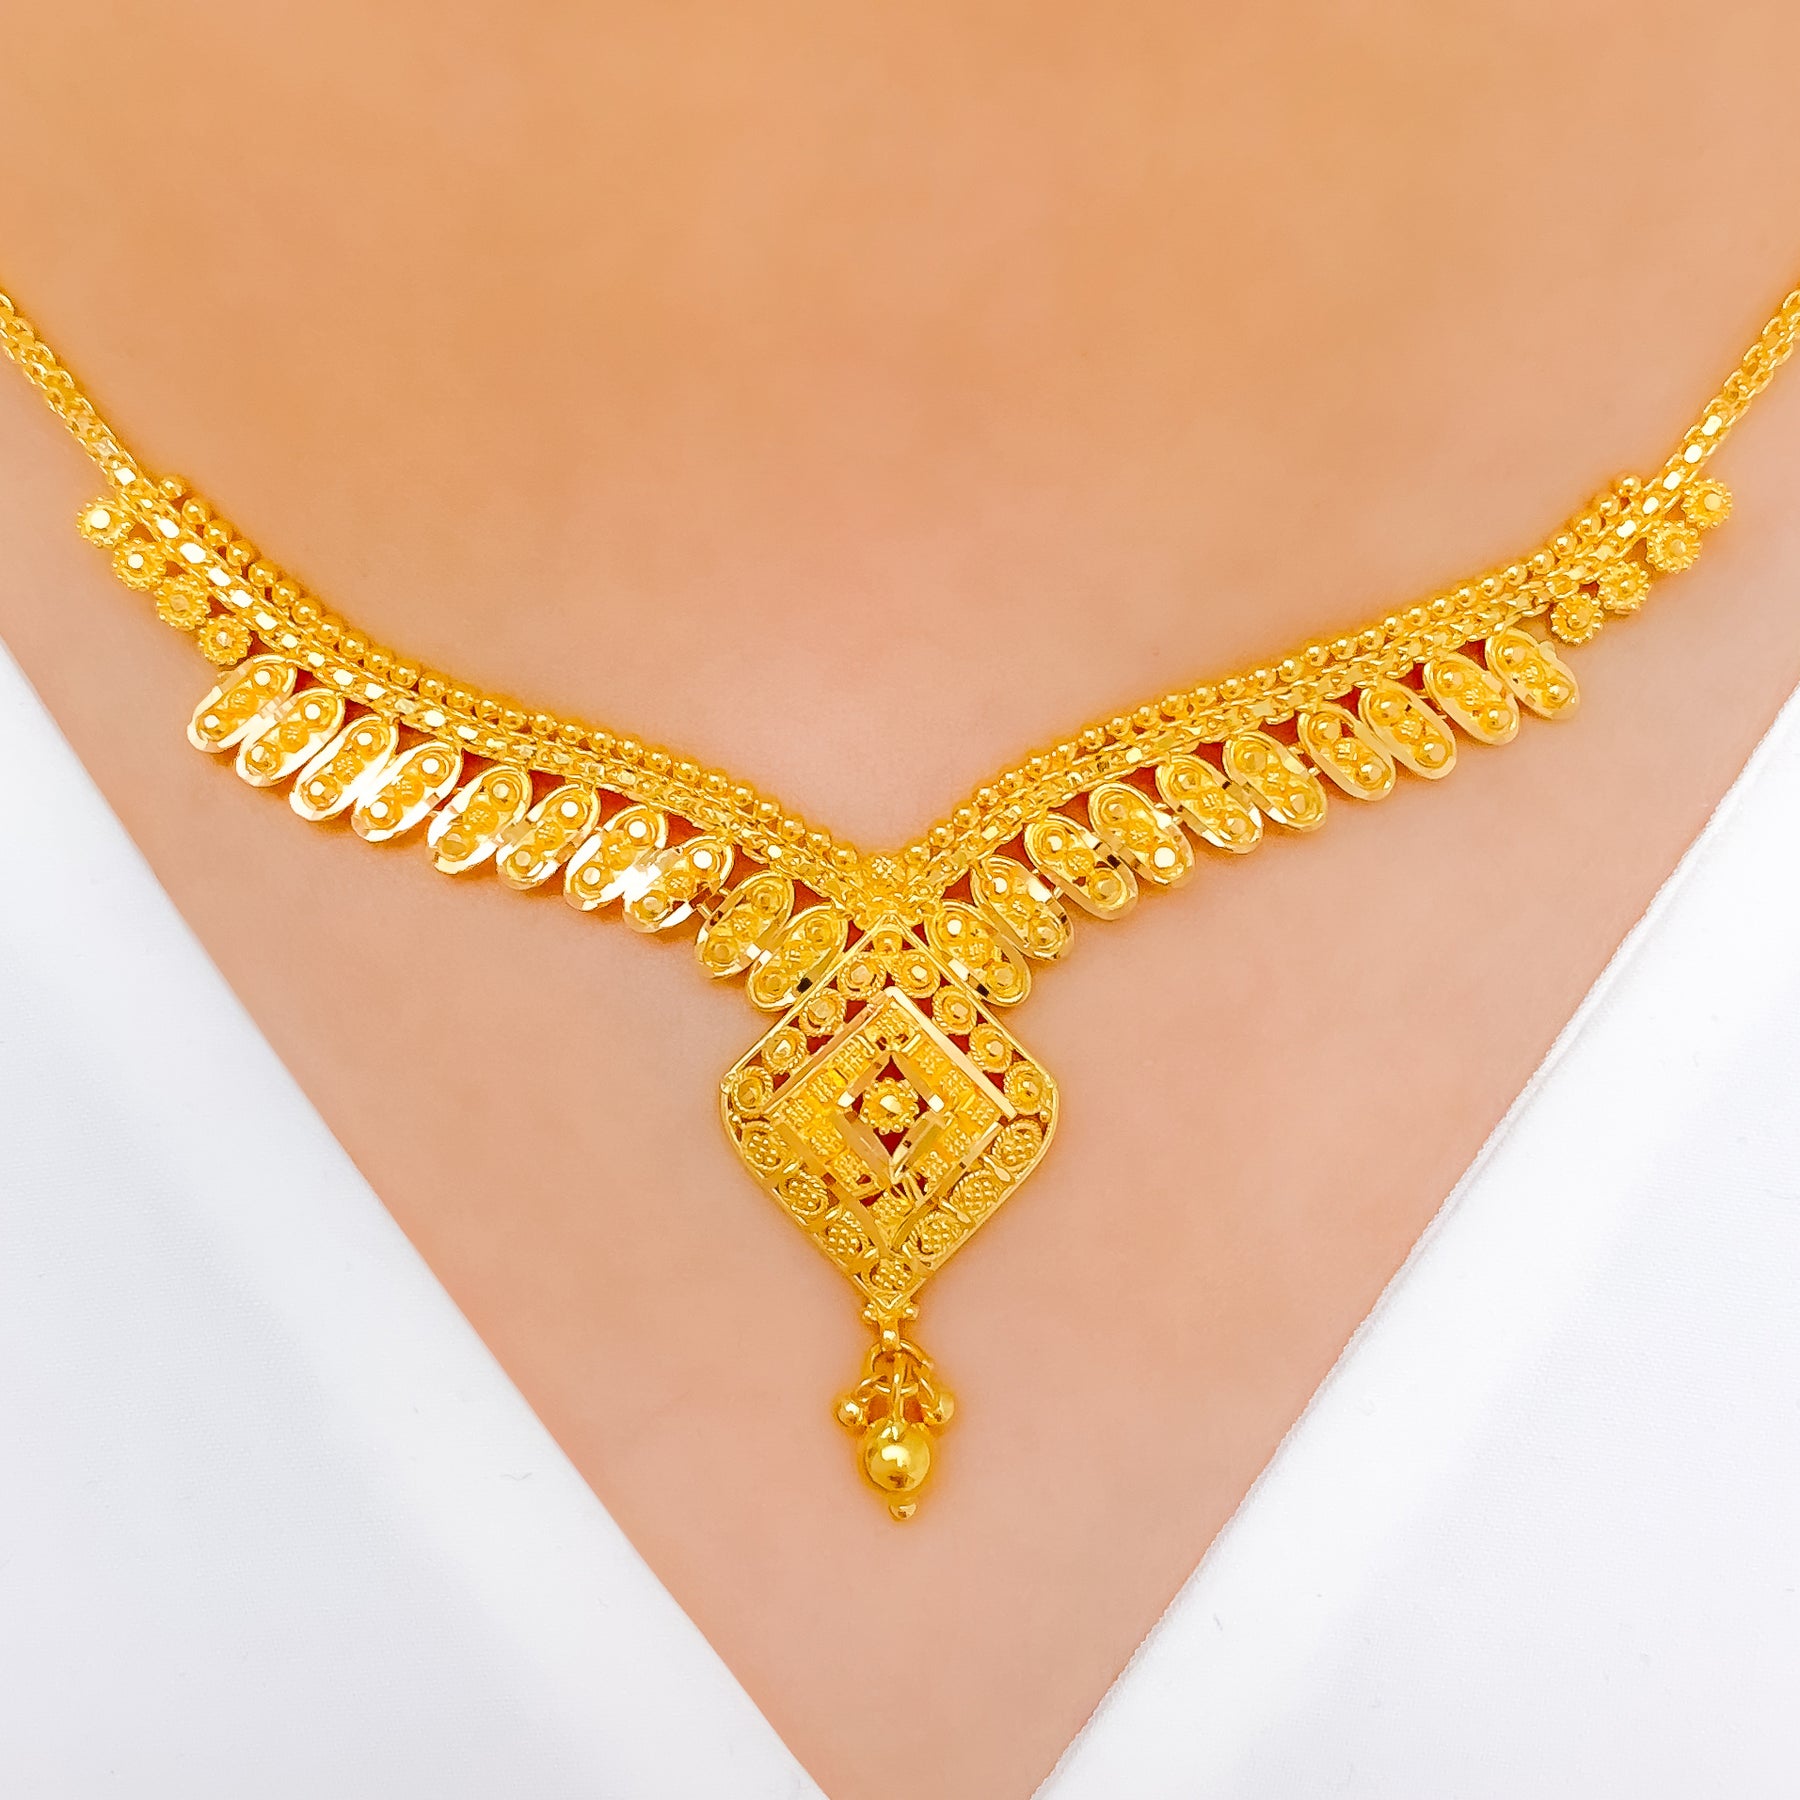 V Shape Wedding Wear 22ct Gold Necklace Set at Rs 750000/set in Mumbai |  ID: 2852257803497